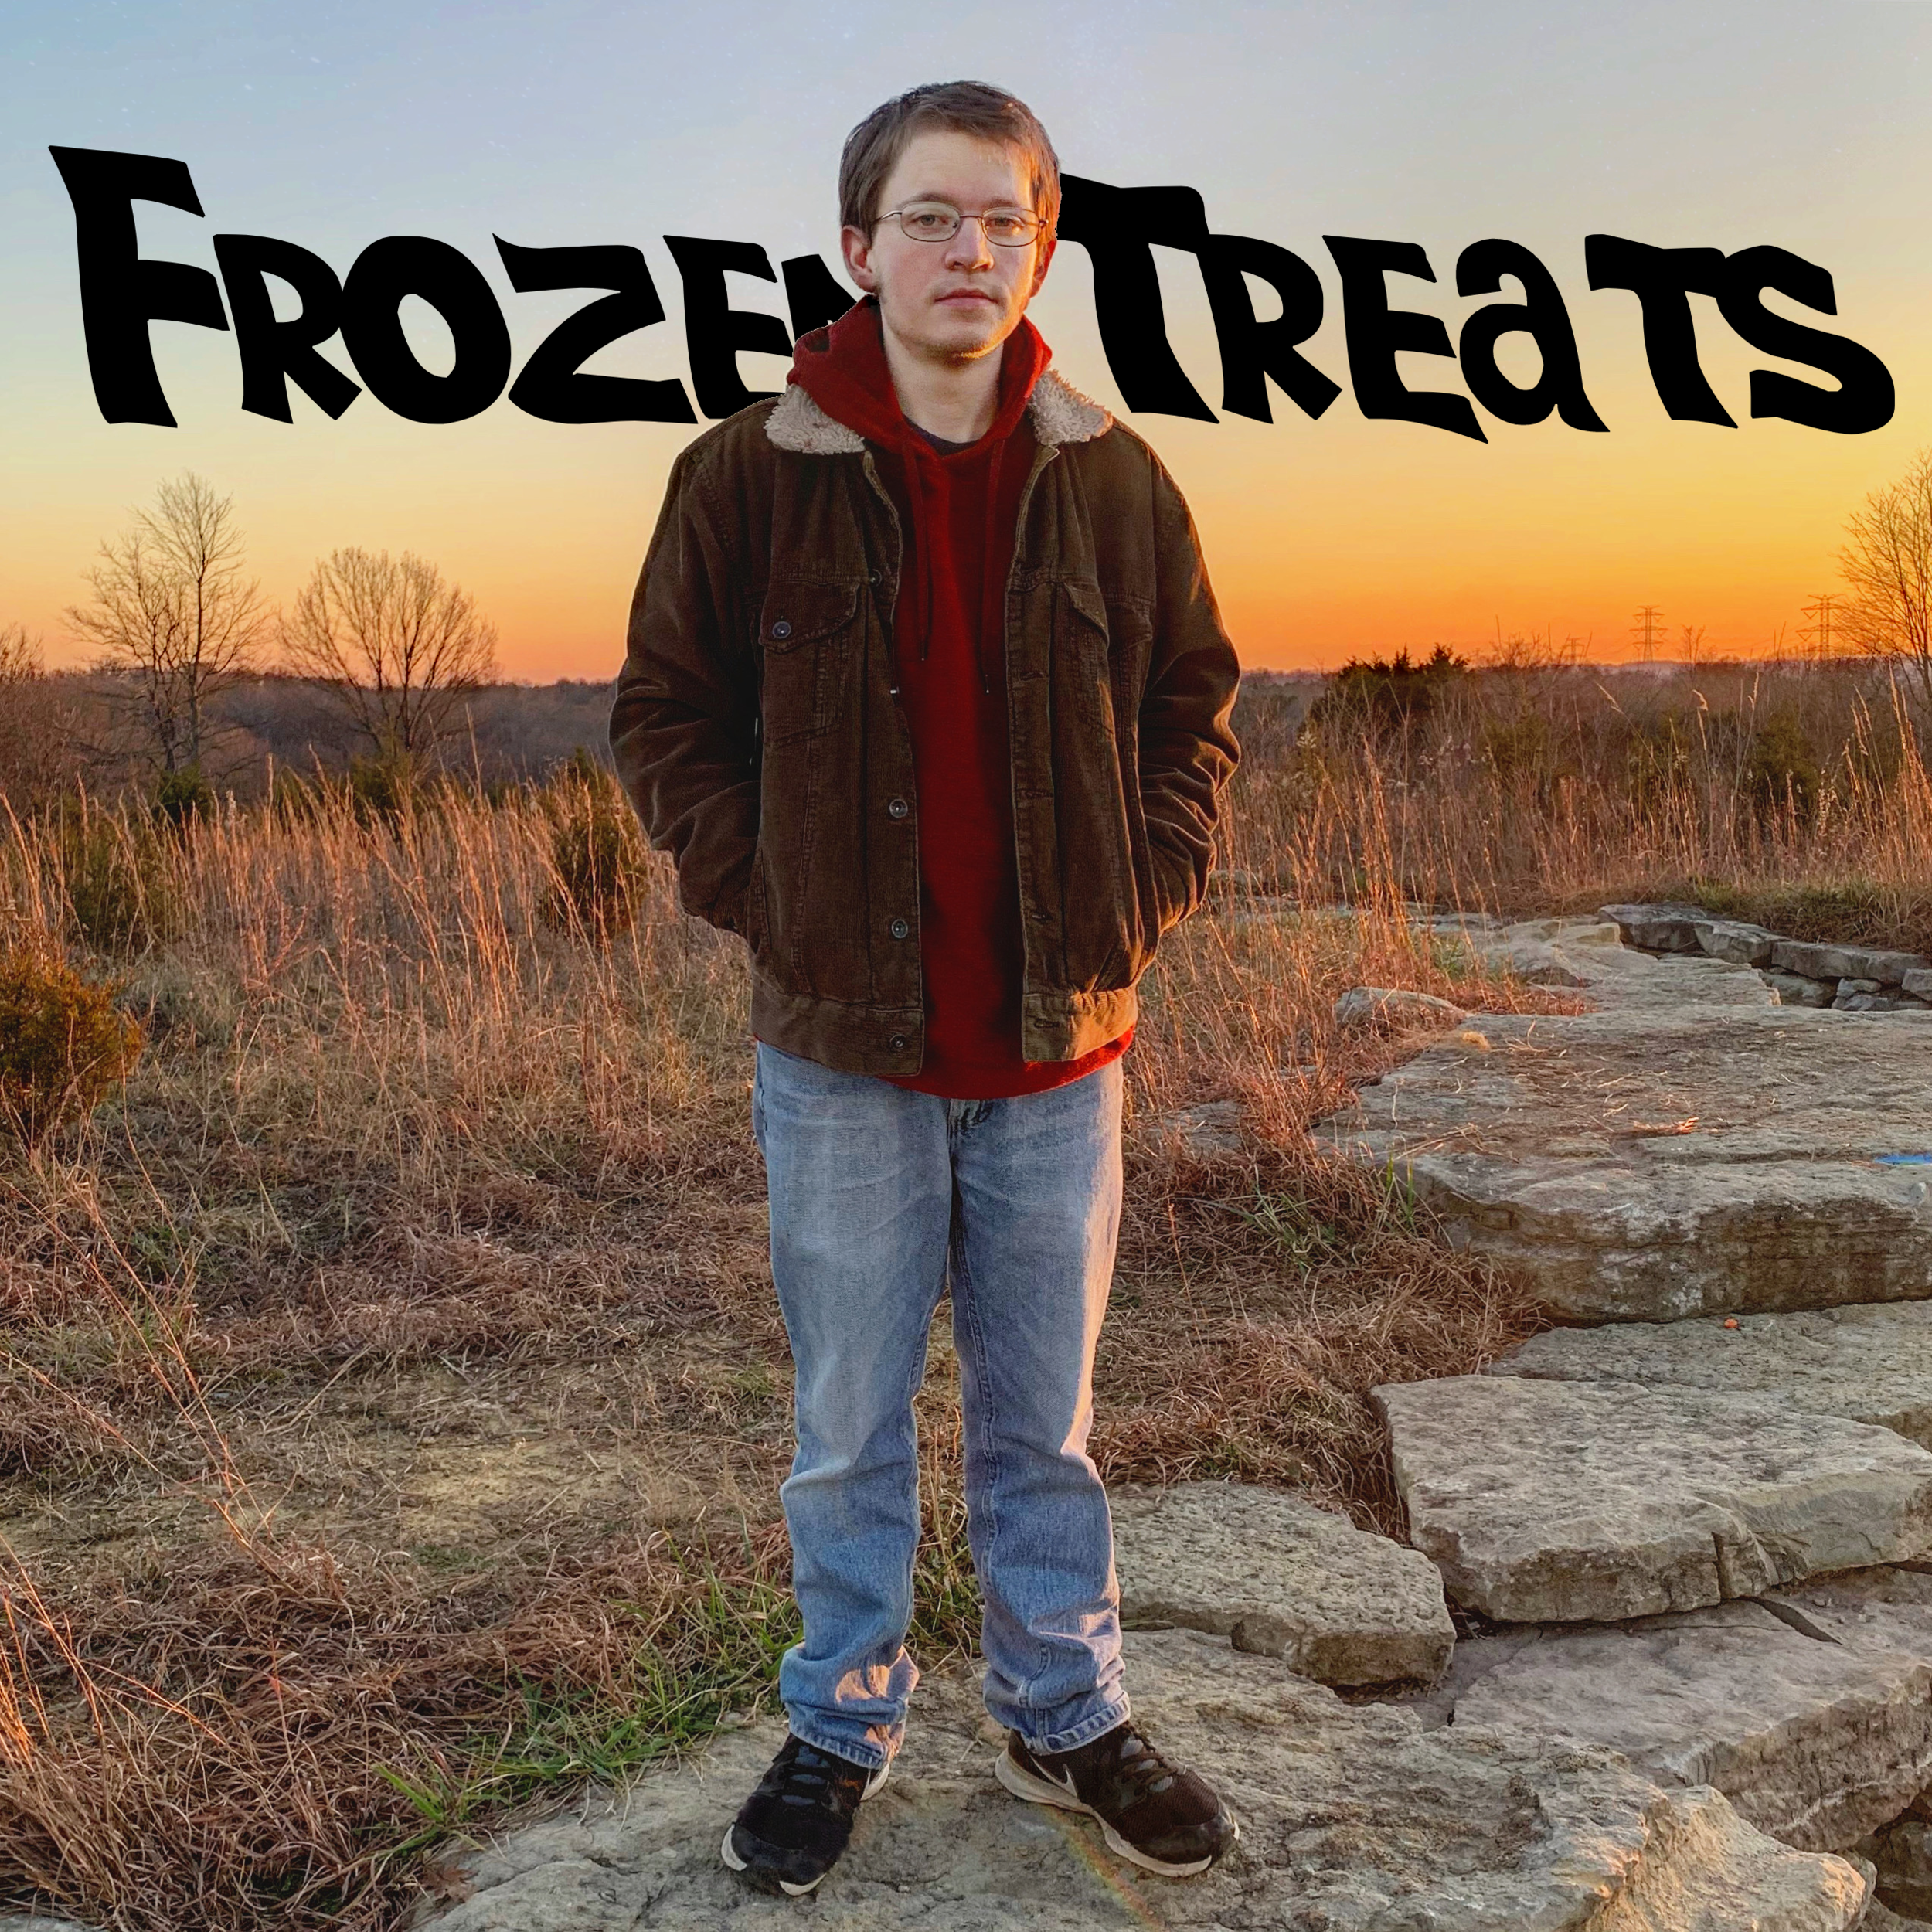 Frozen Treats promo pic